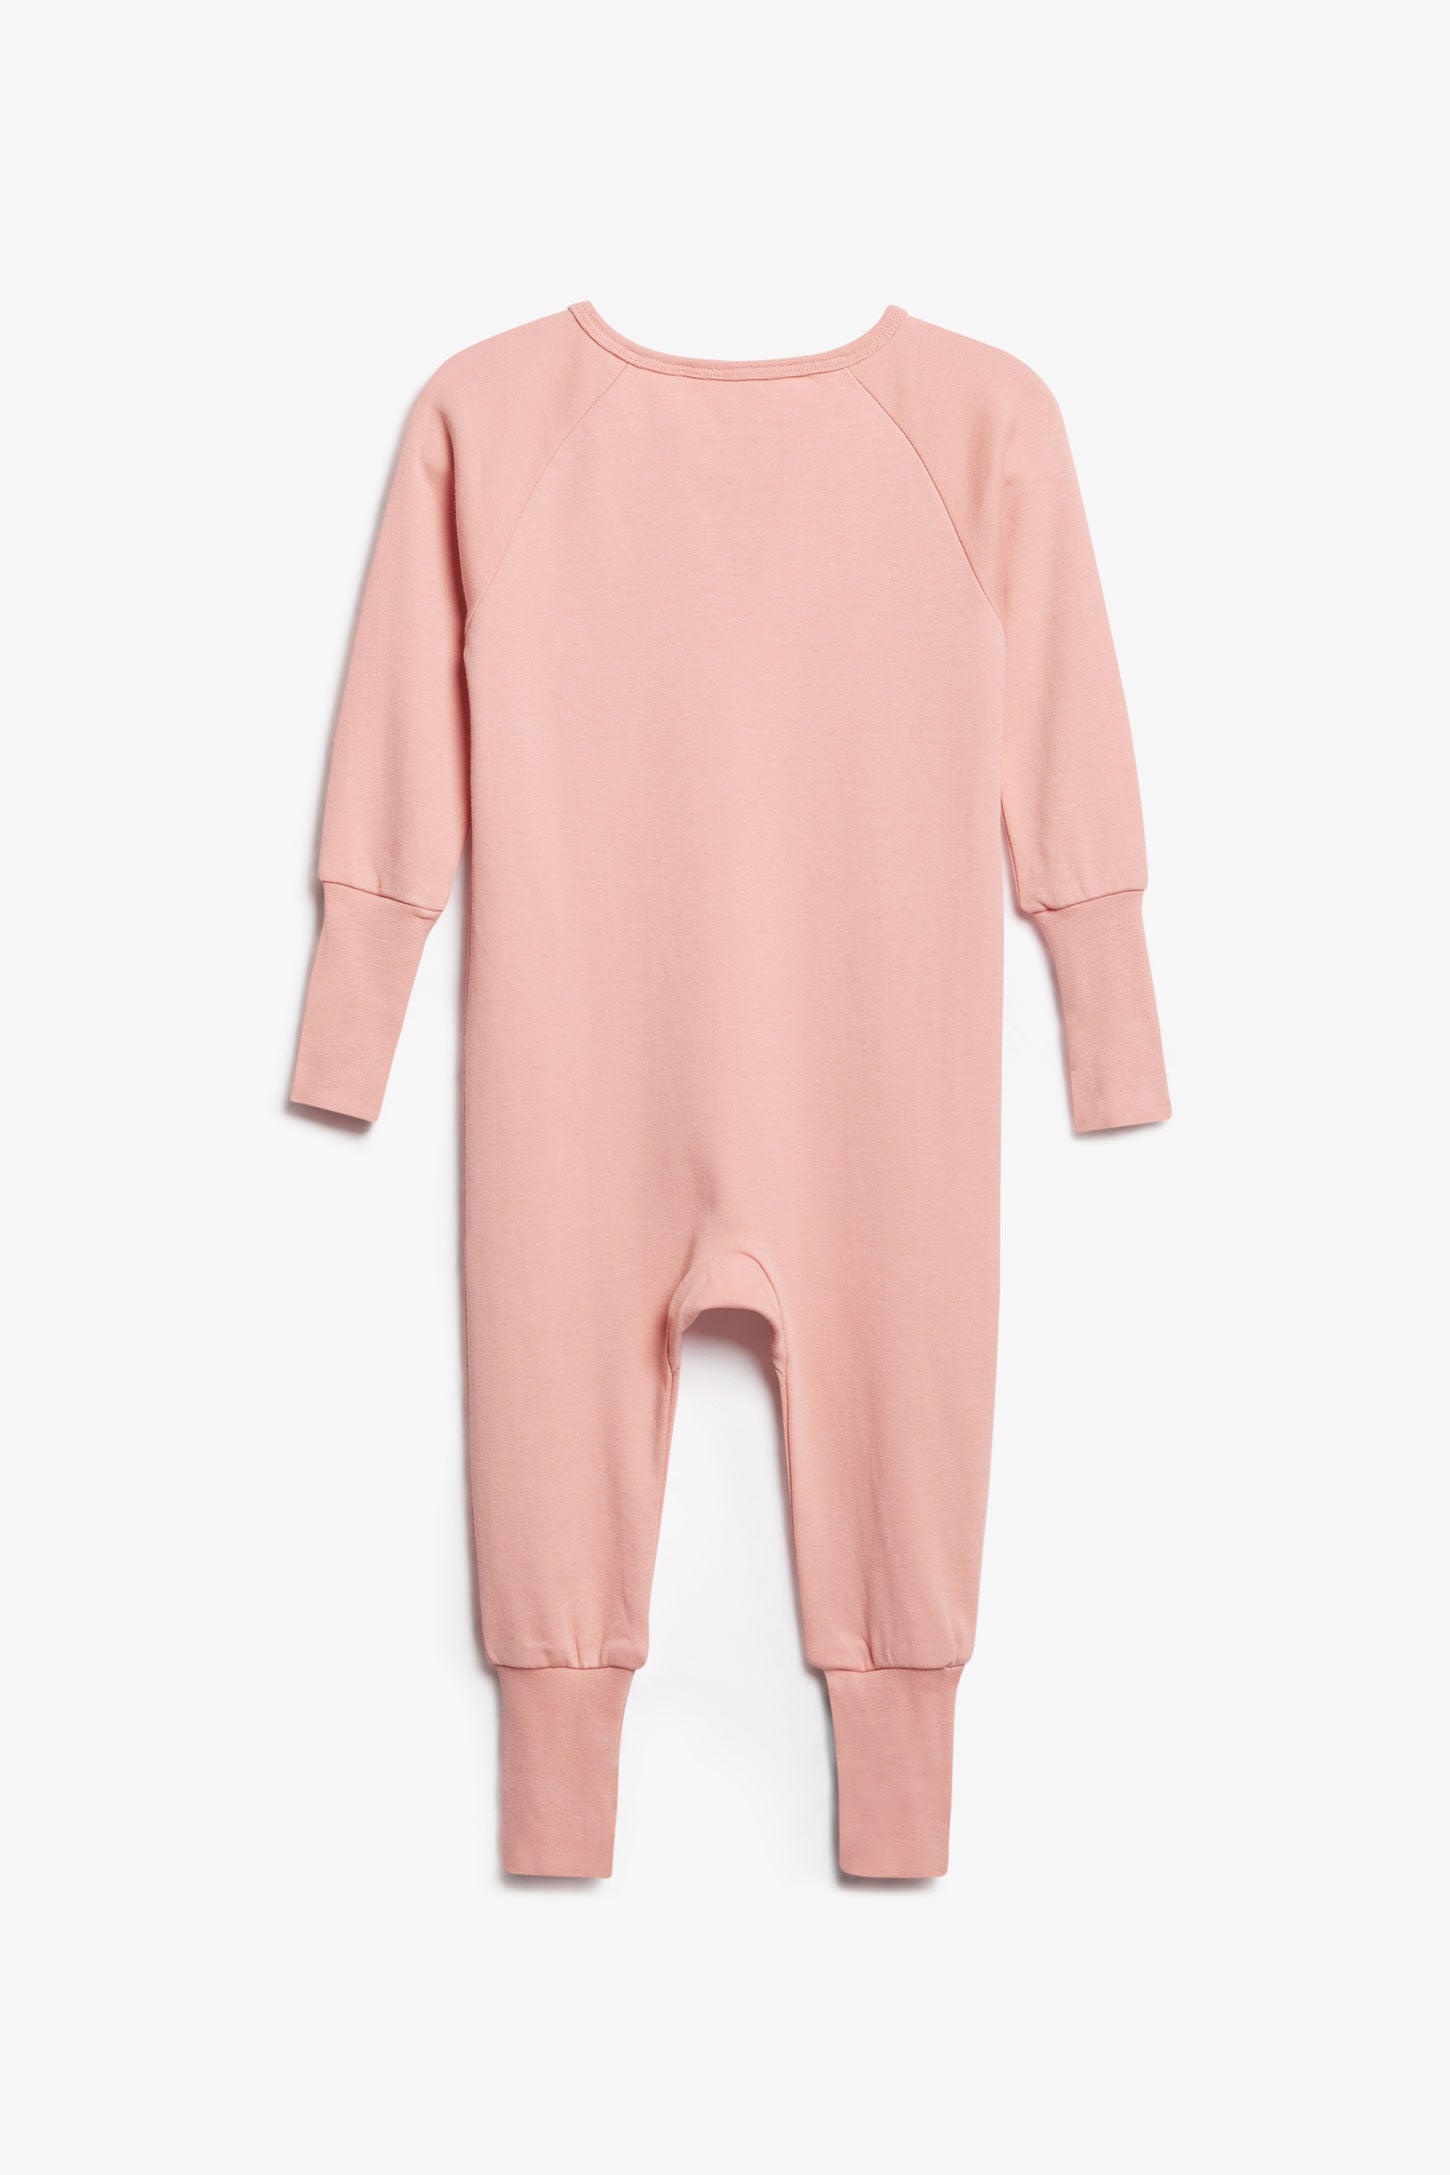 Pyjama 1-pièce évolutif en coton bio - Bébé fille && ROSE FONCE